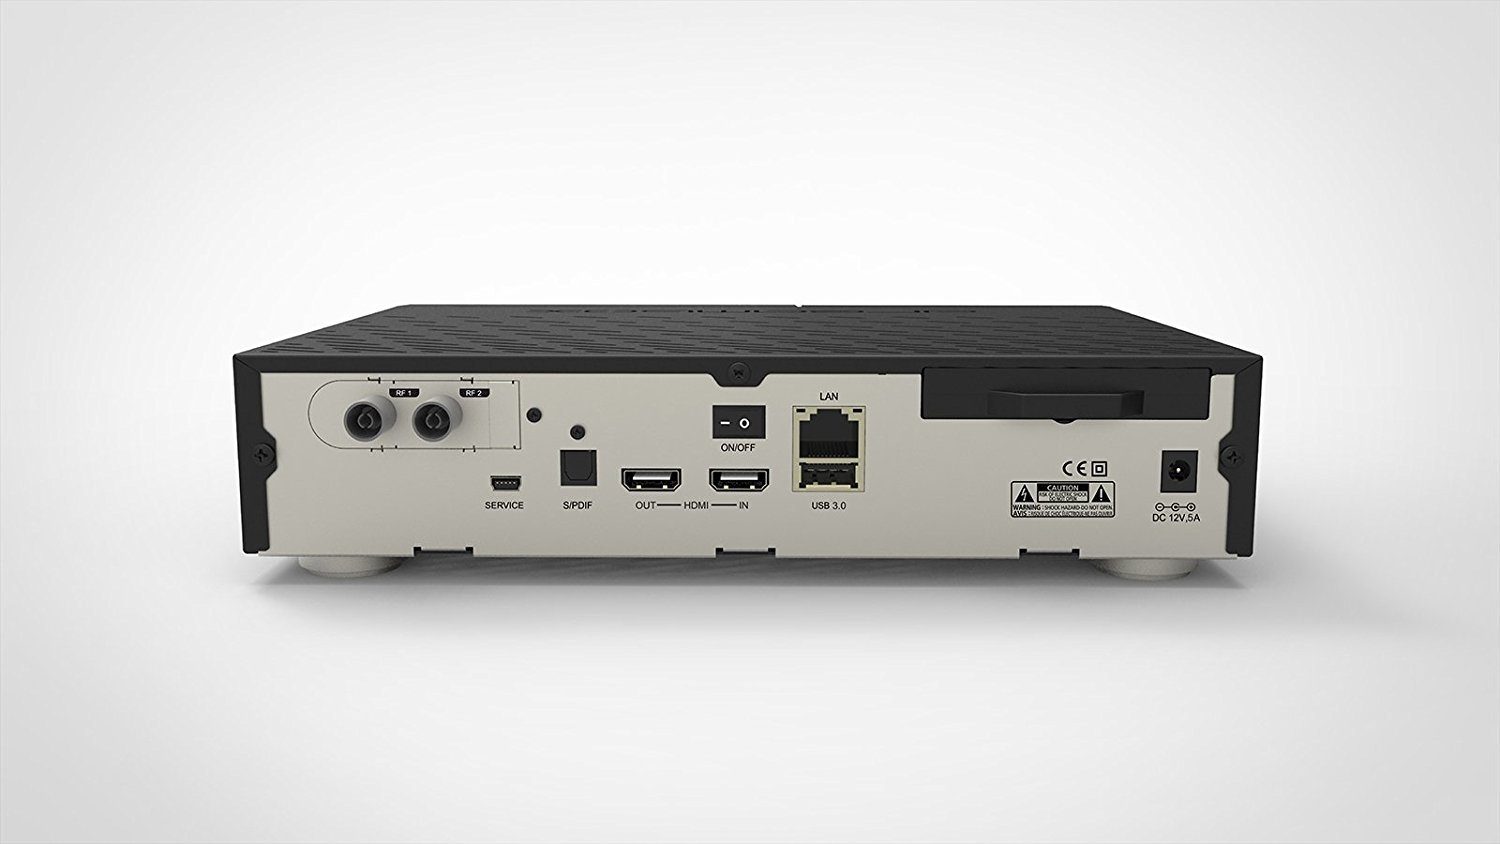 Dreambox Dreambox mit E2 Tuner 1x Satellitenreceiver Receiver UHD Linux 4K DM900 DVB-C/T2 Dual